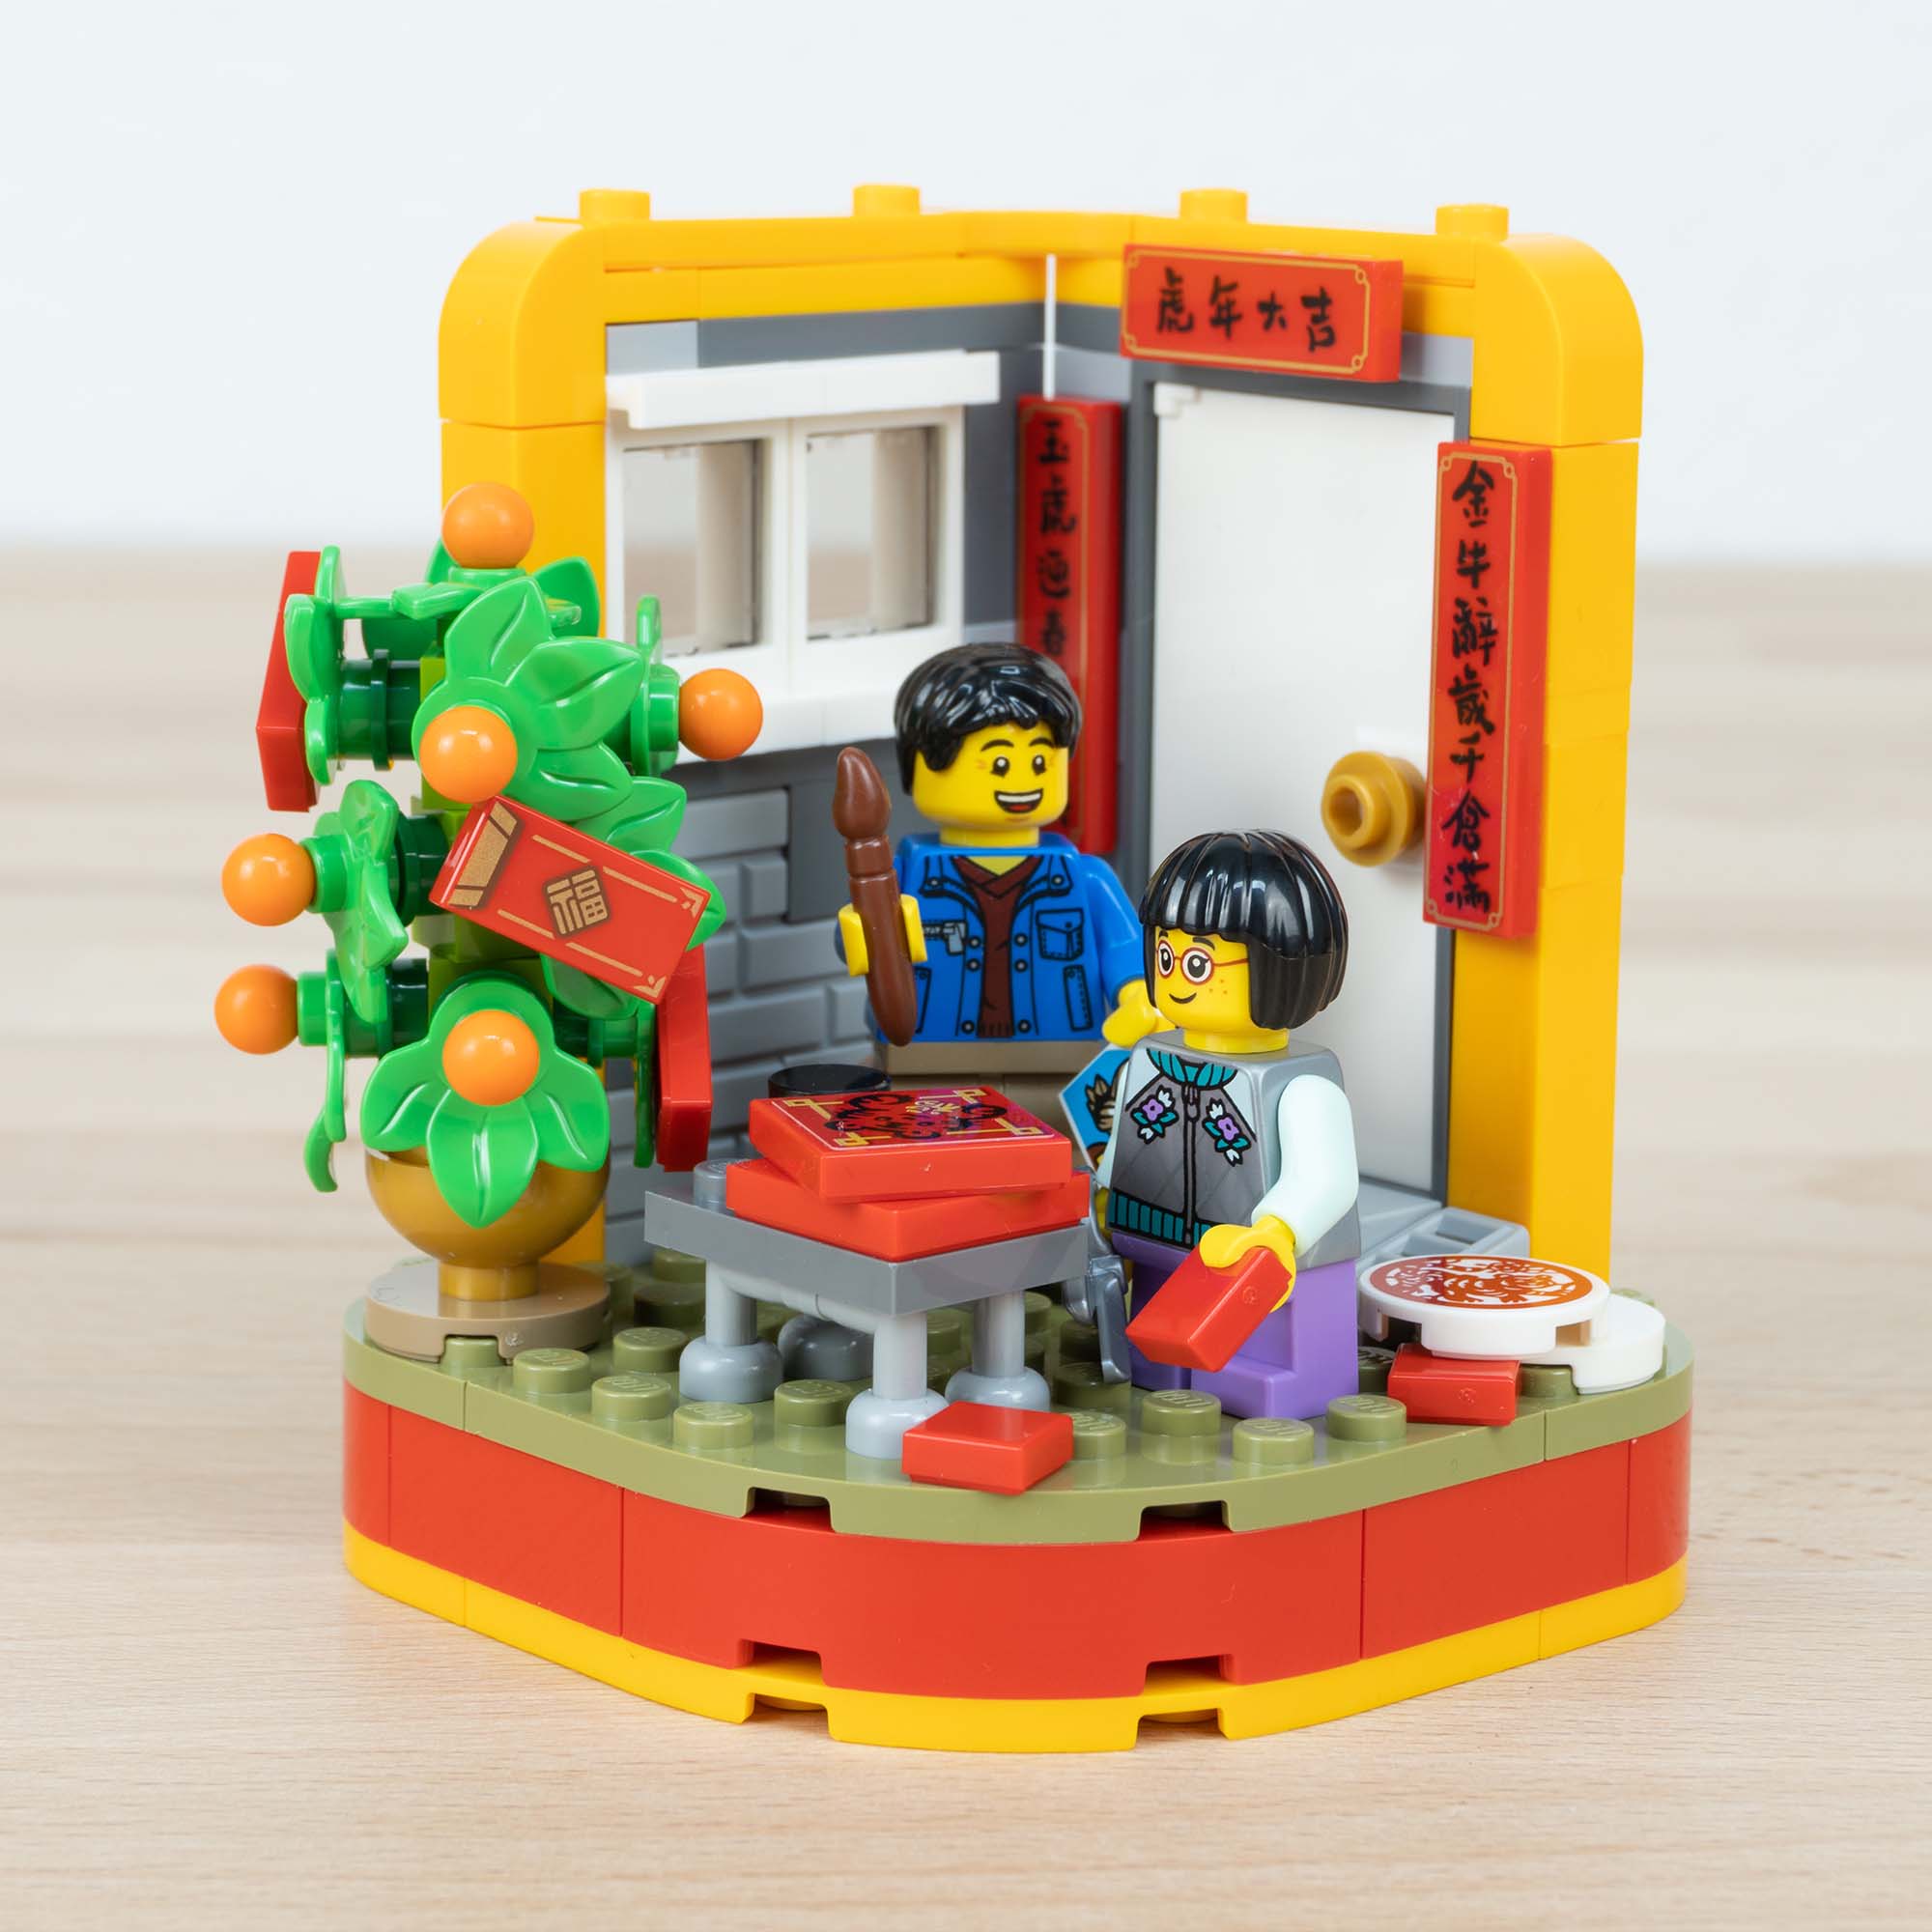 LEGO 80108 Review Scenen 5 1